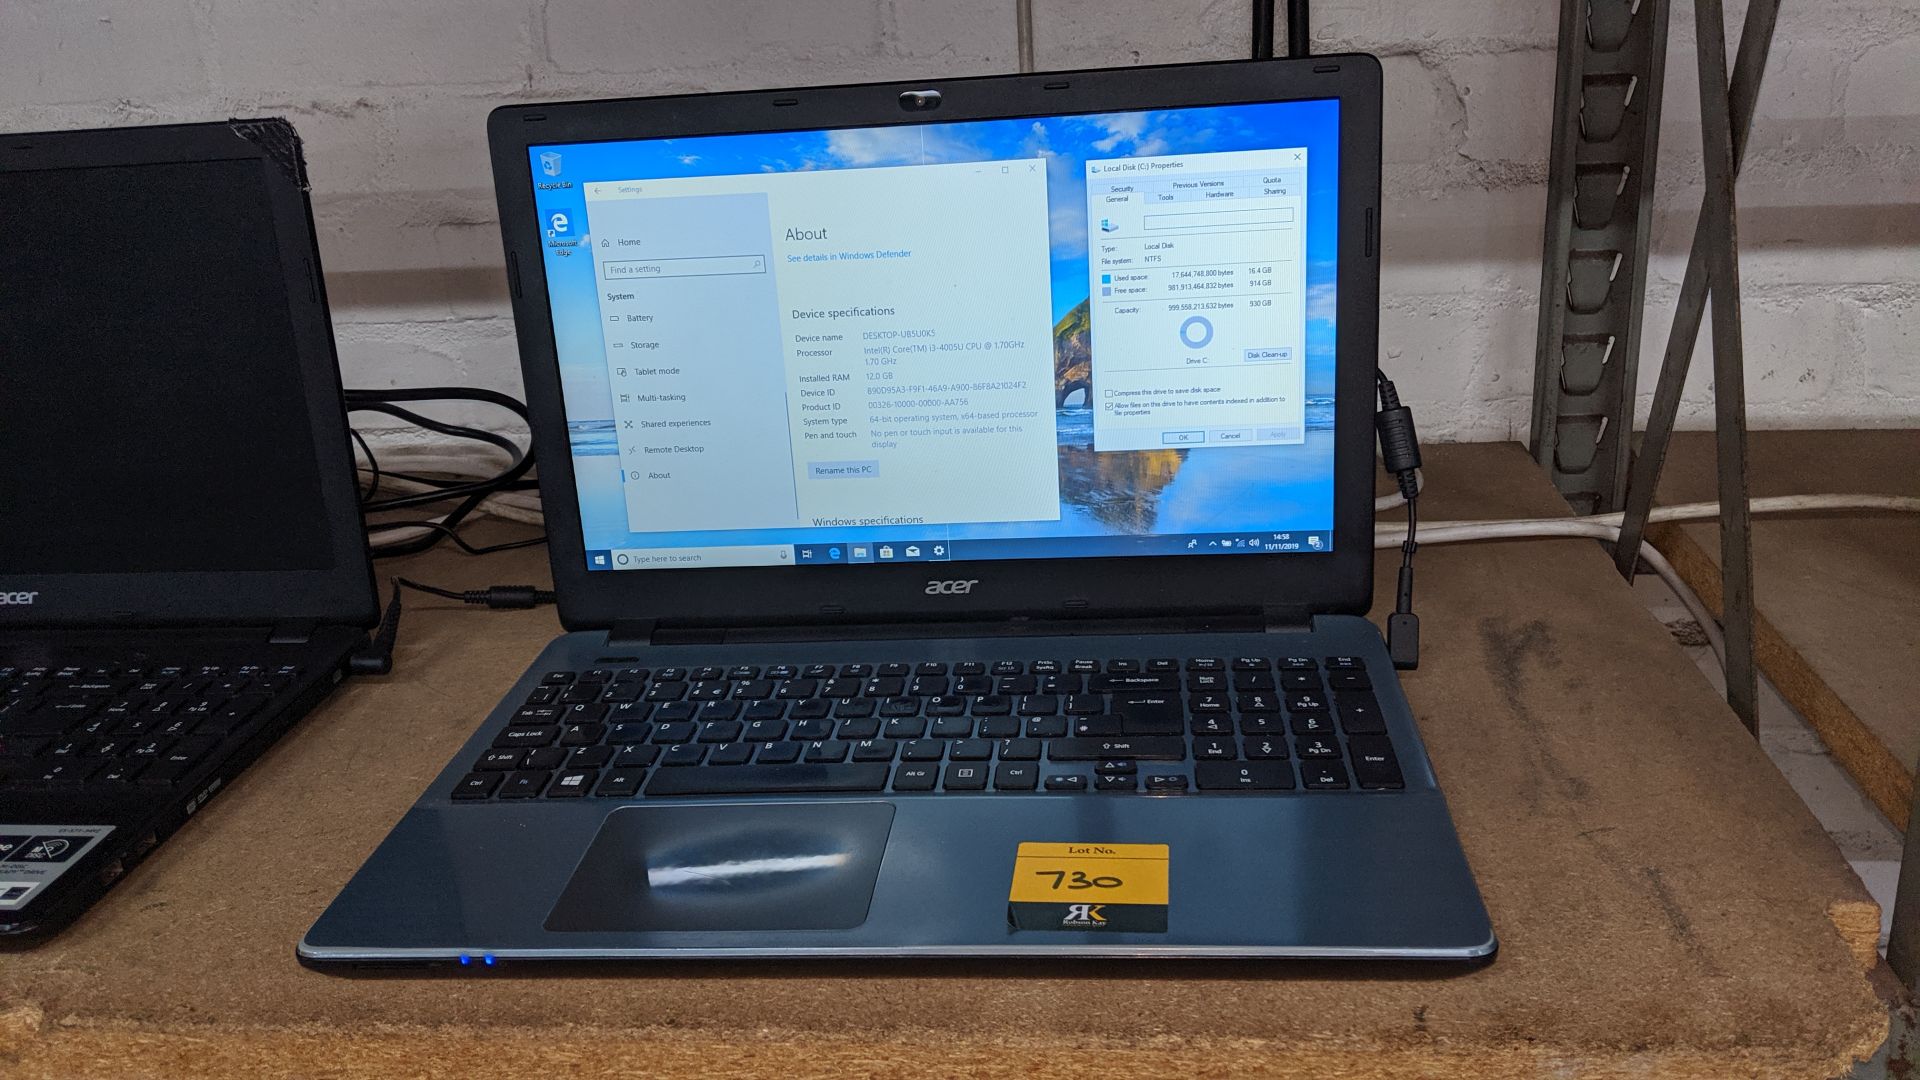 Acer Aspire E15 widescreen notebook computer, Intel Core i3-4005u CPU @1.7GHz, 12Gb RAM, 1Tb HDD - Image 2 of 6